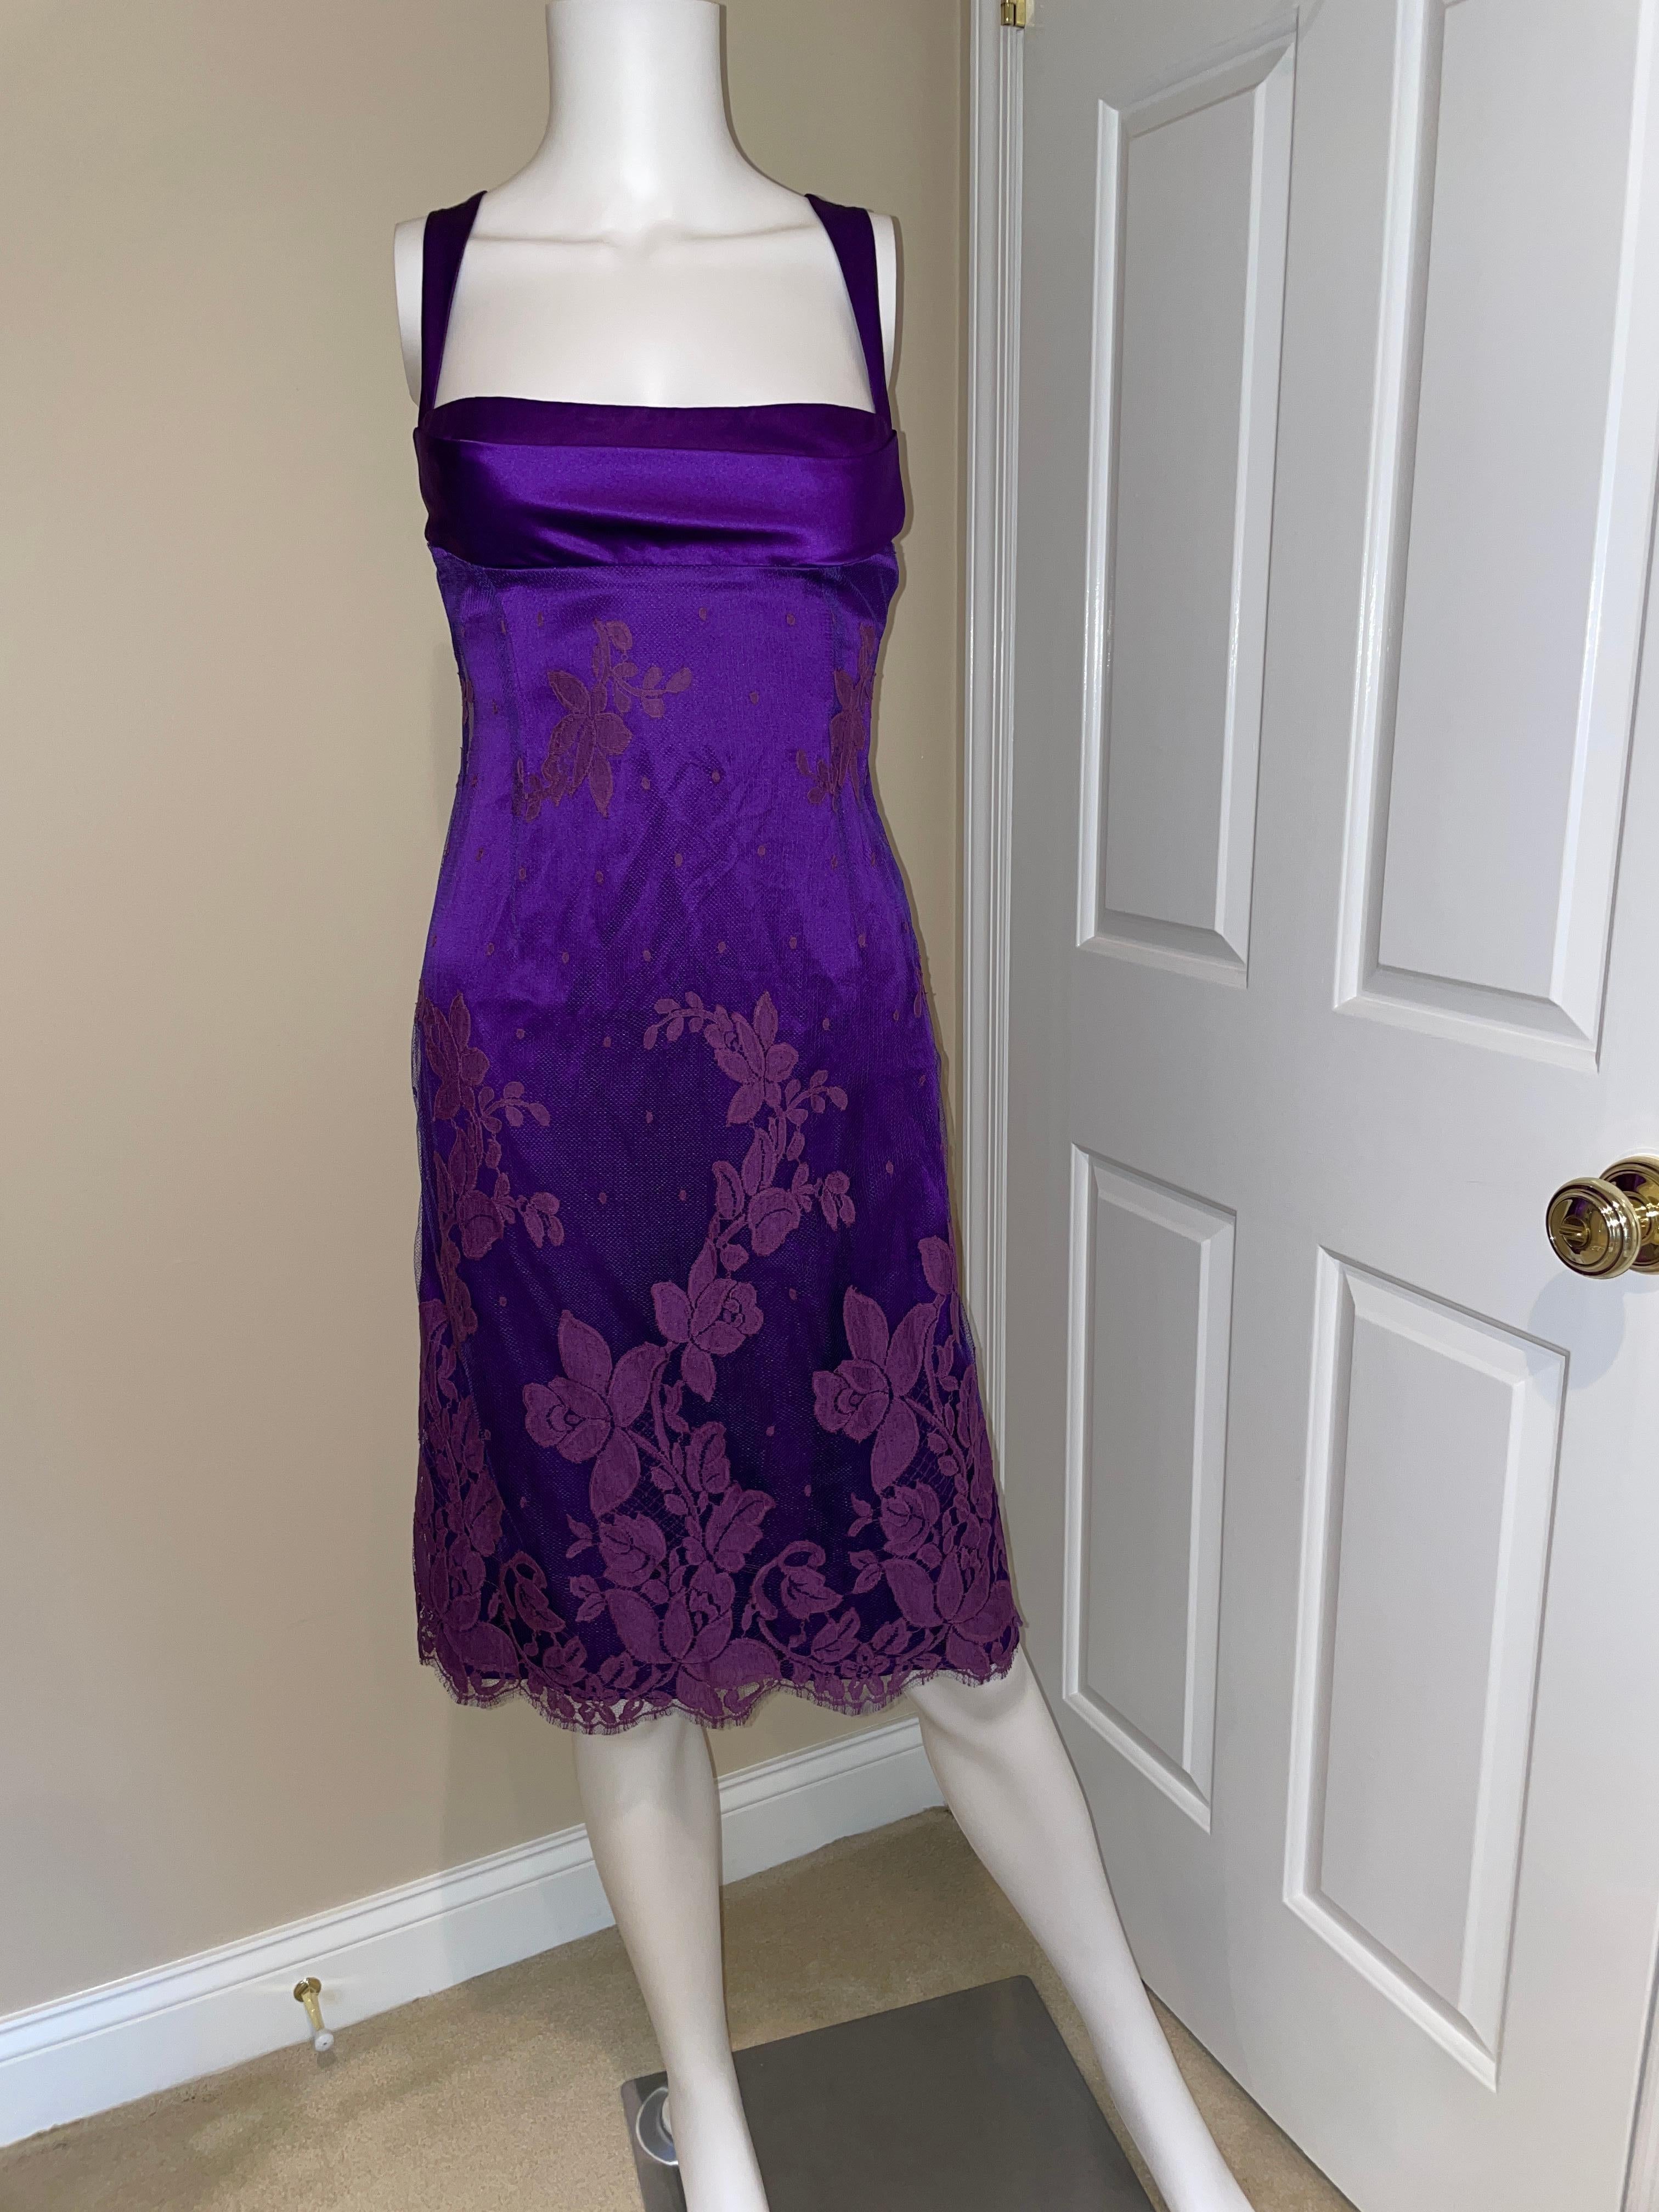 GIANNI VERSACE c. 1996 purple lace dress 2